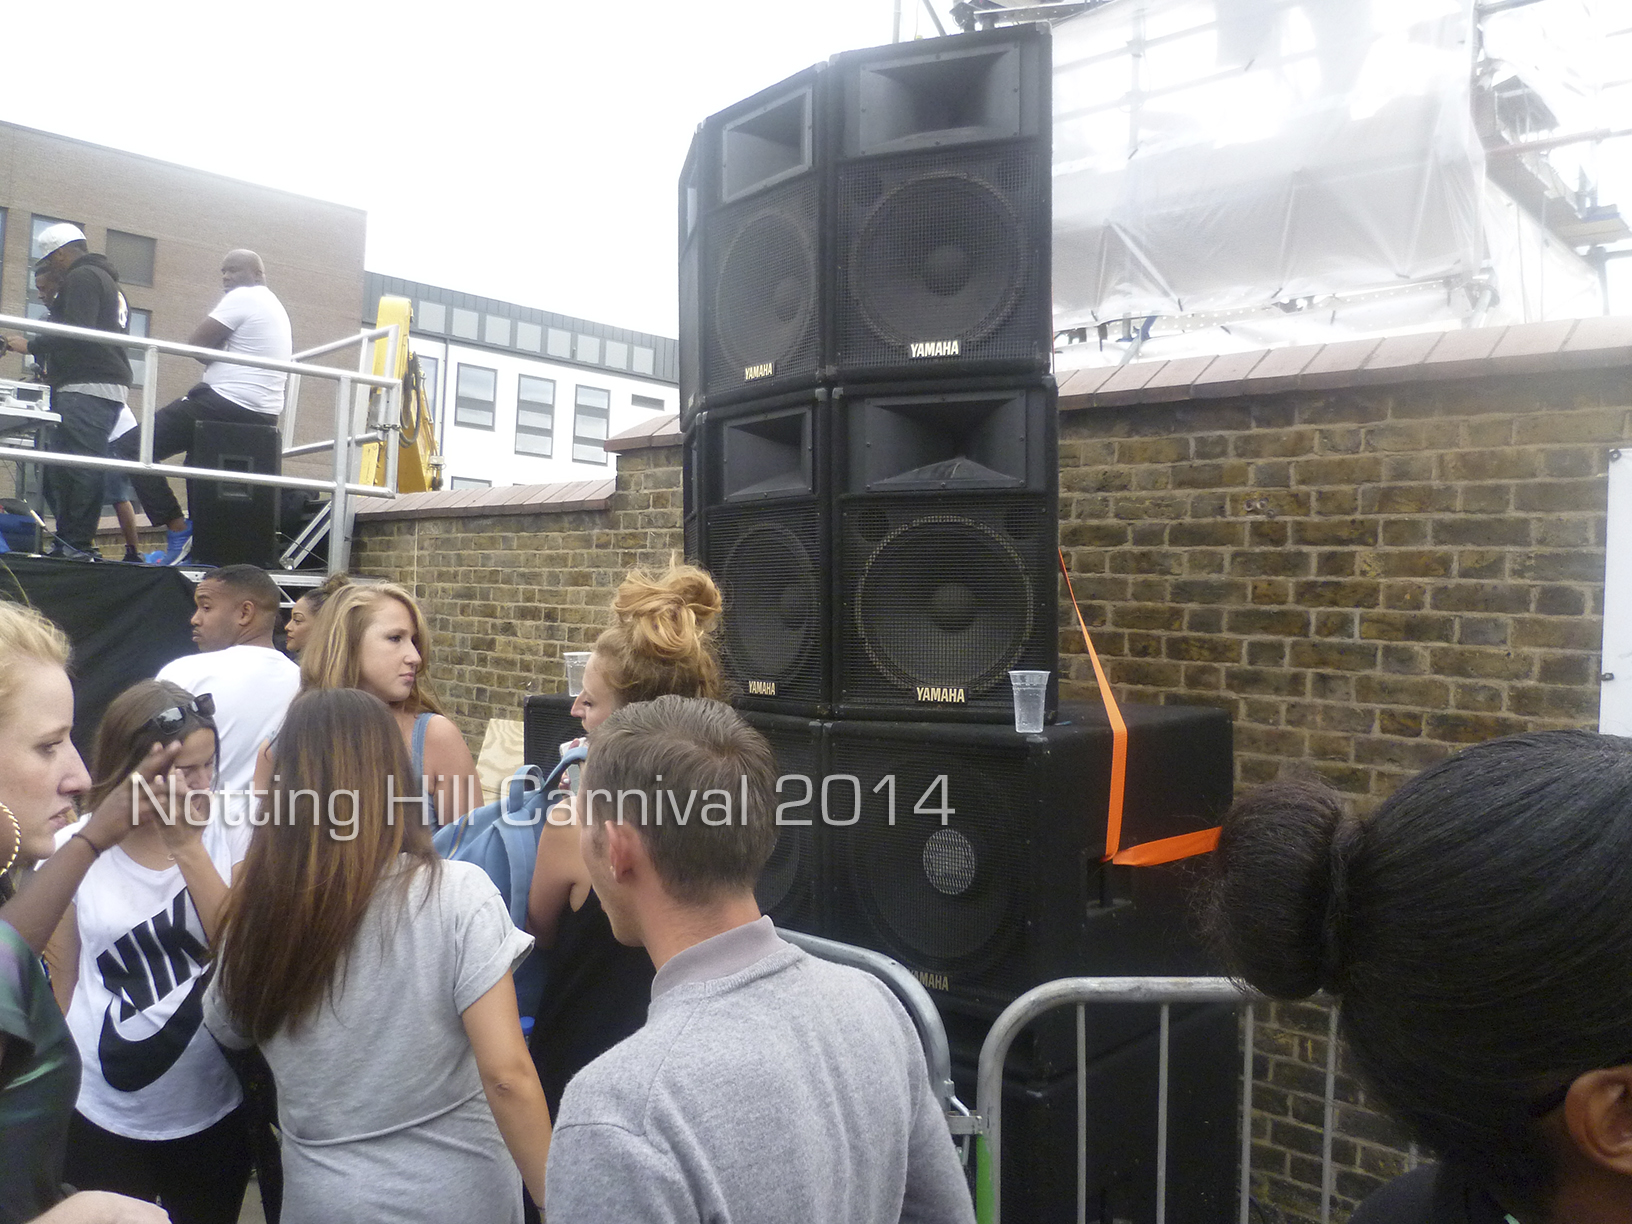 Notting-Hill-Carnival-2014-Street-Sound-System-22